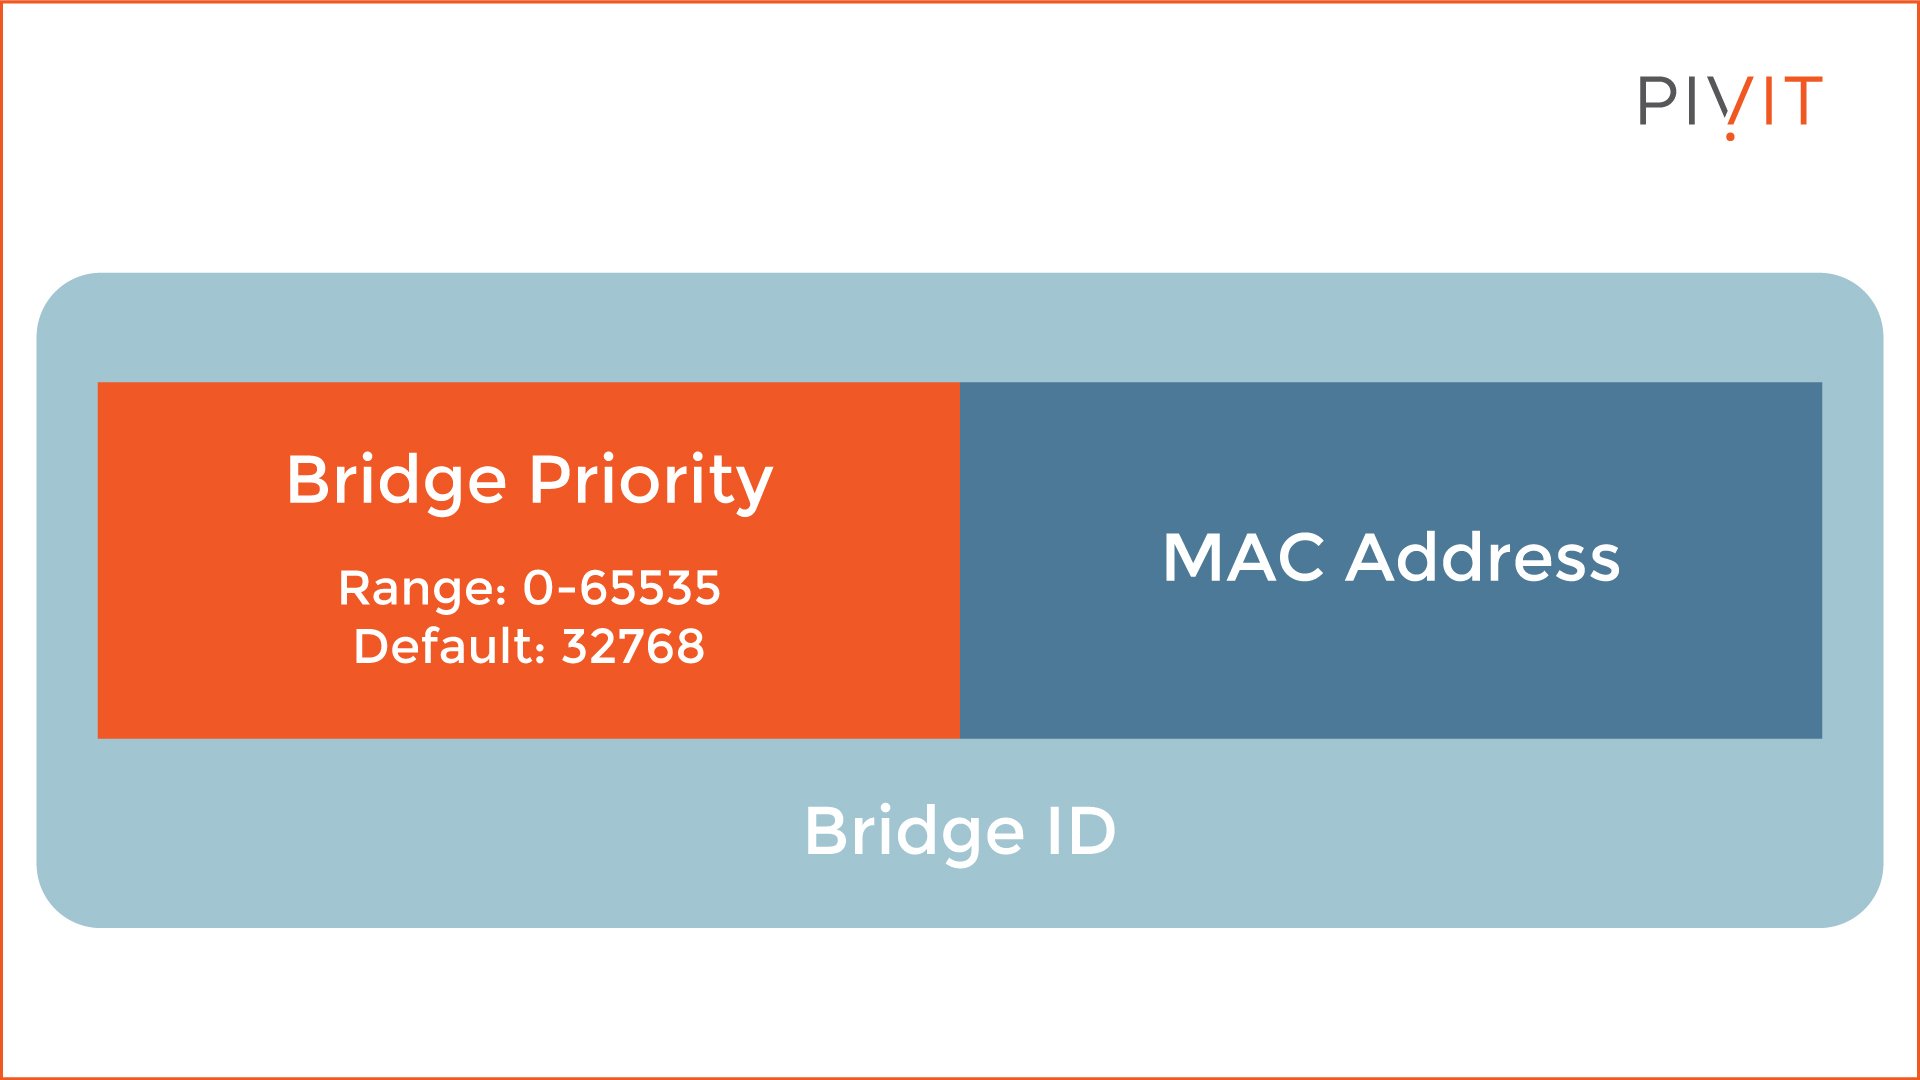 Bridge ID components